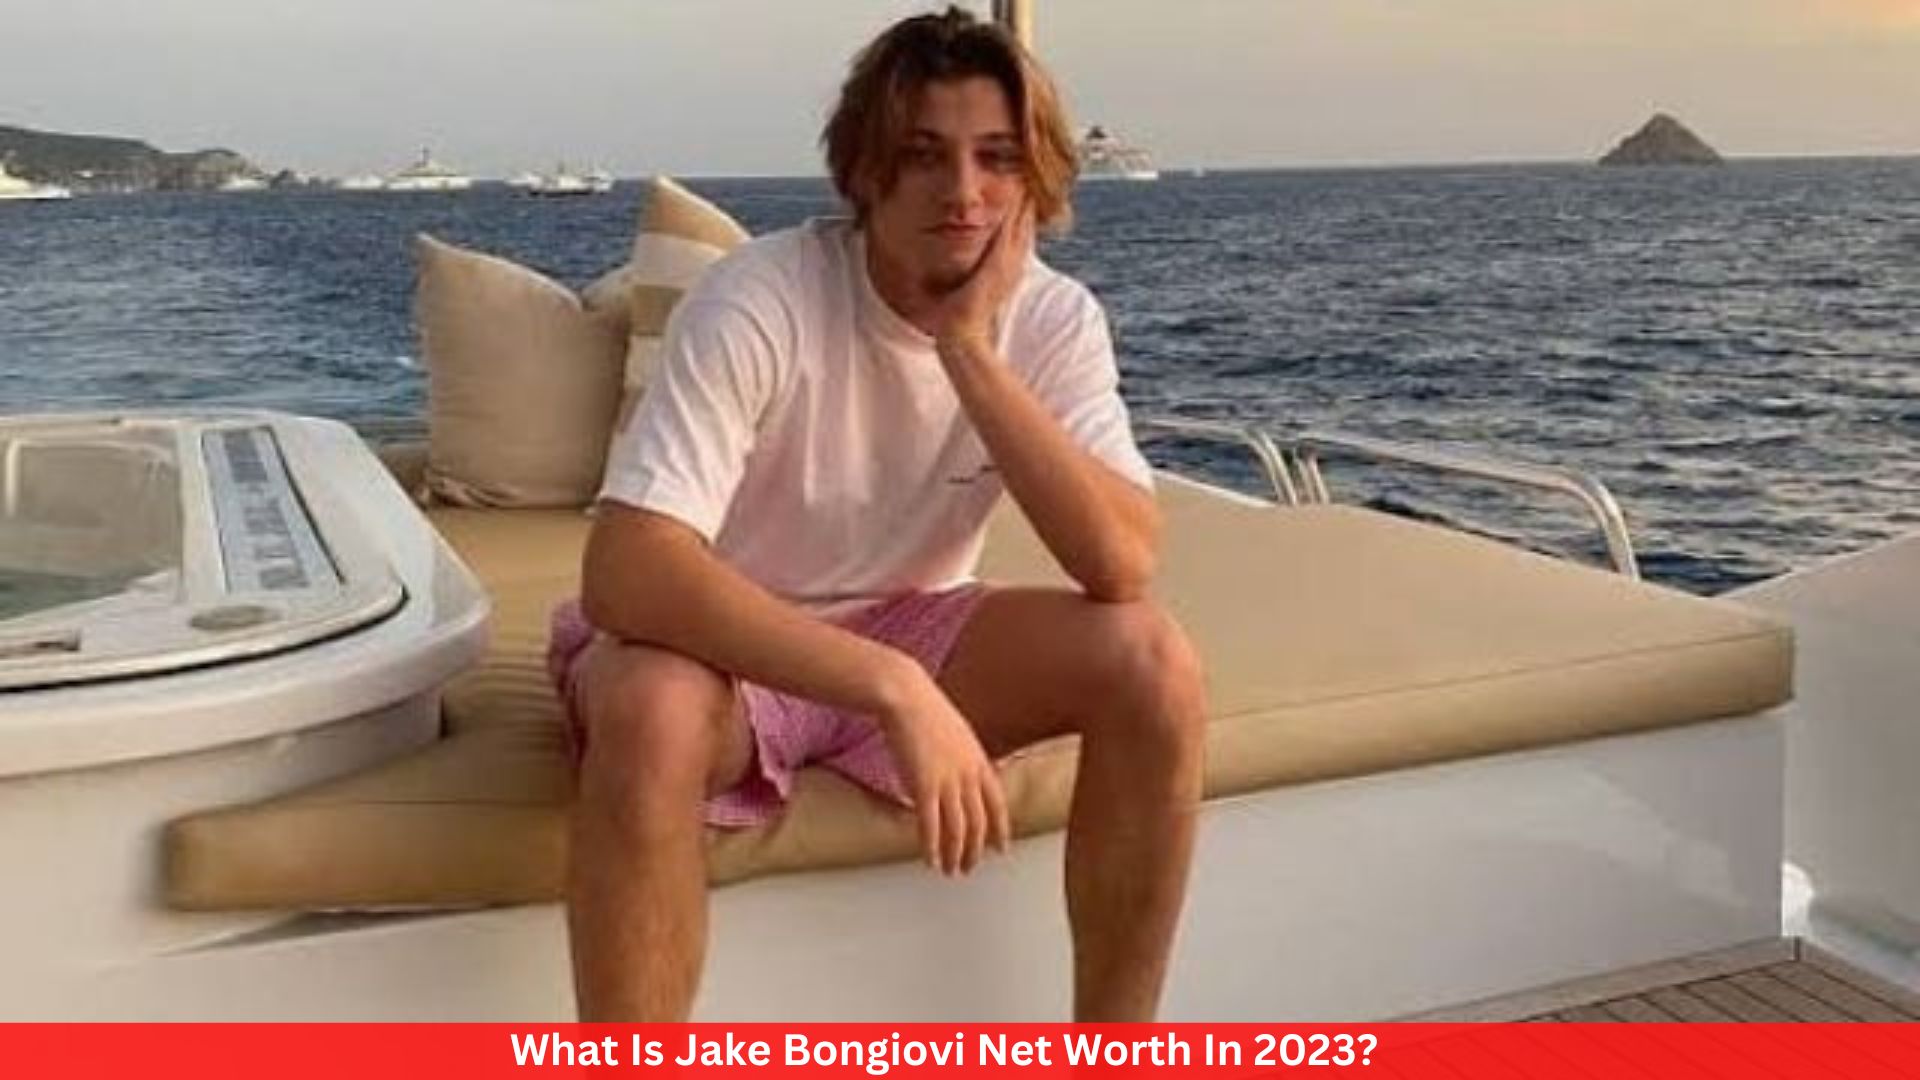 What Is Jake Bongiovi Net Worth In 2023?